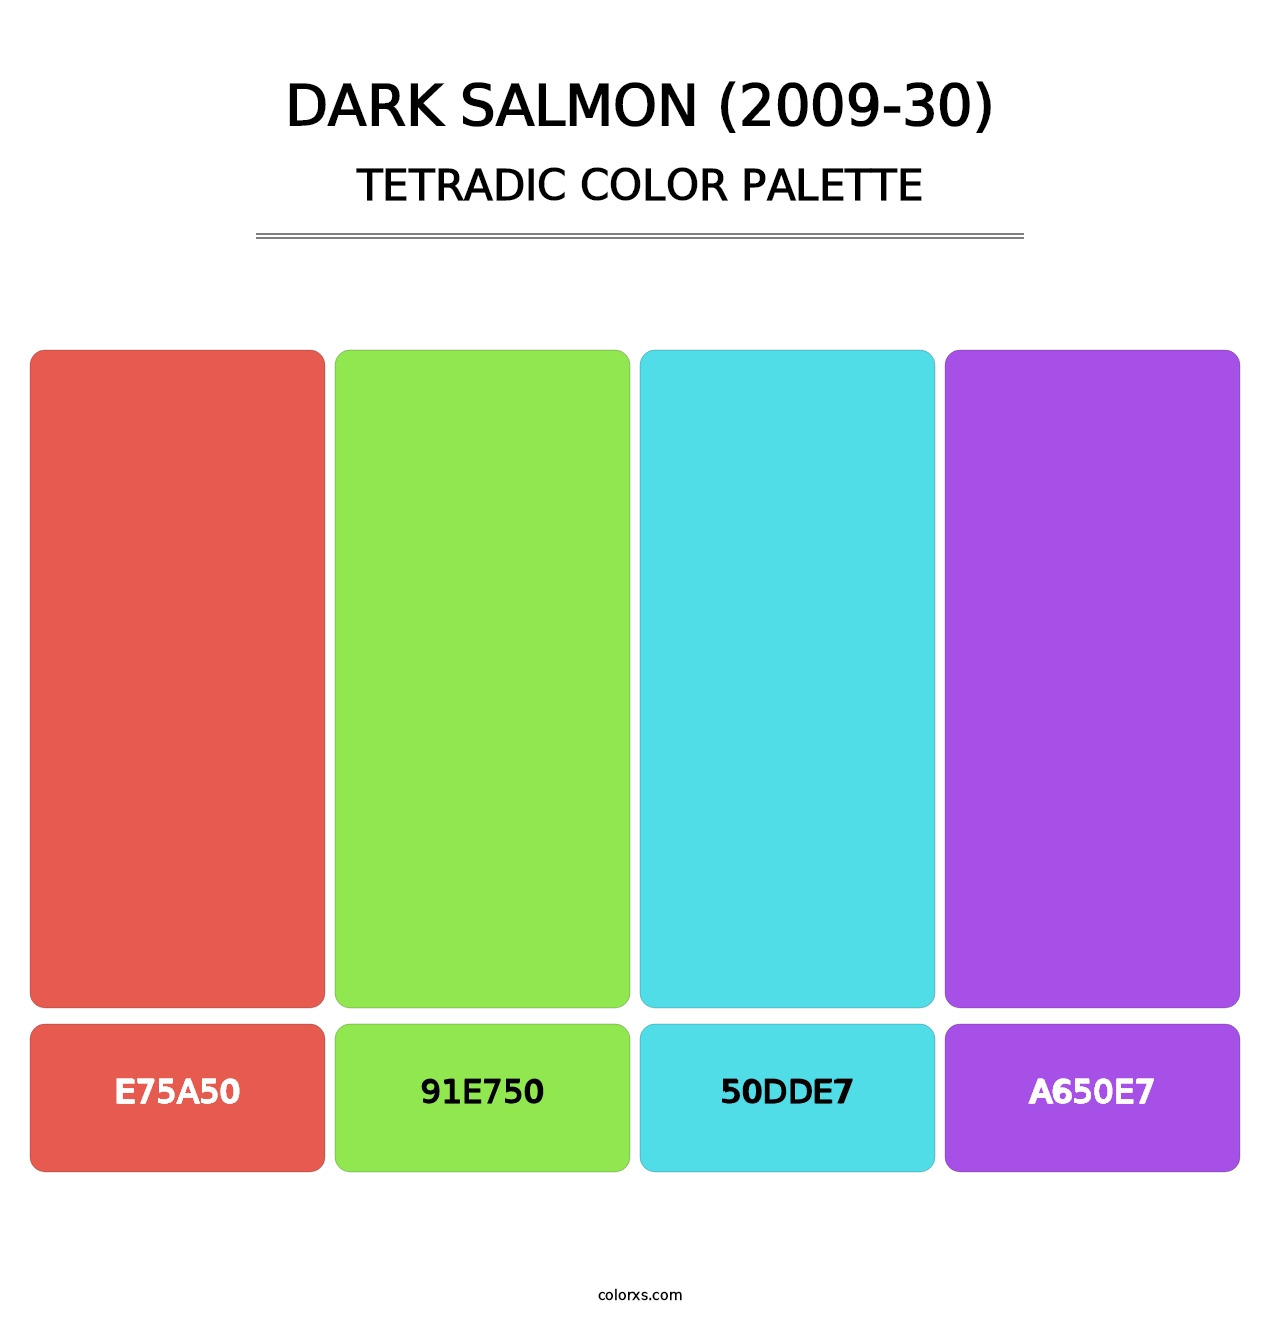 Dark Salmon (2009-30) - Tetradic Color Palette